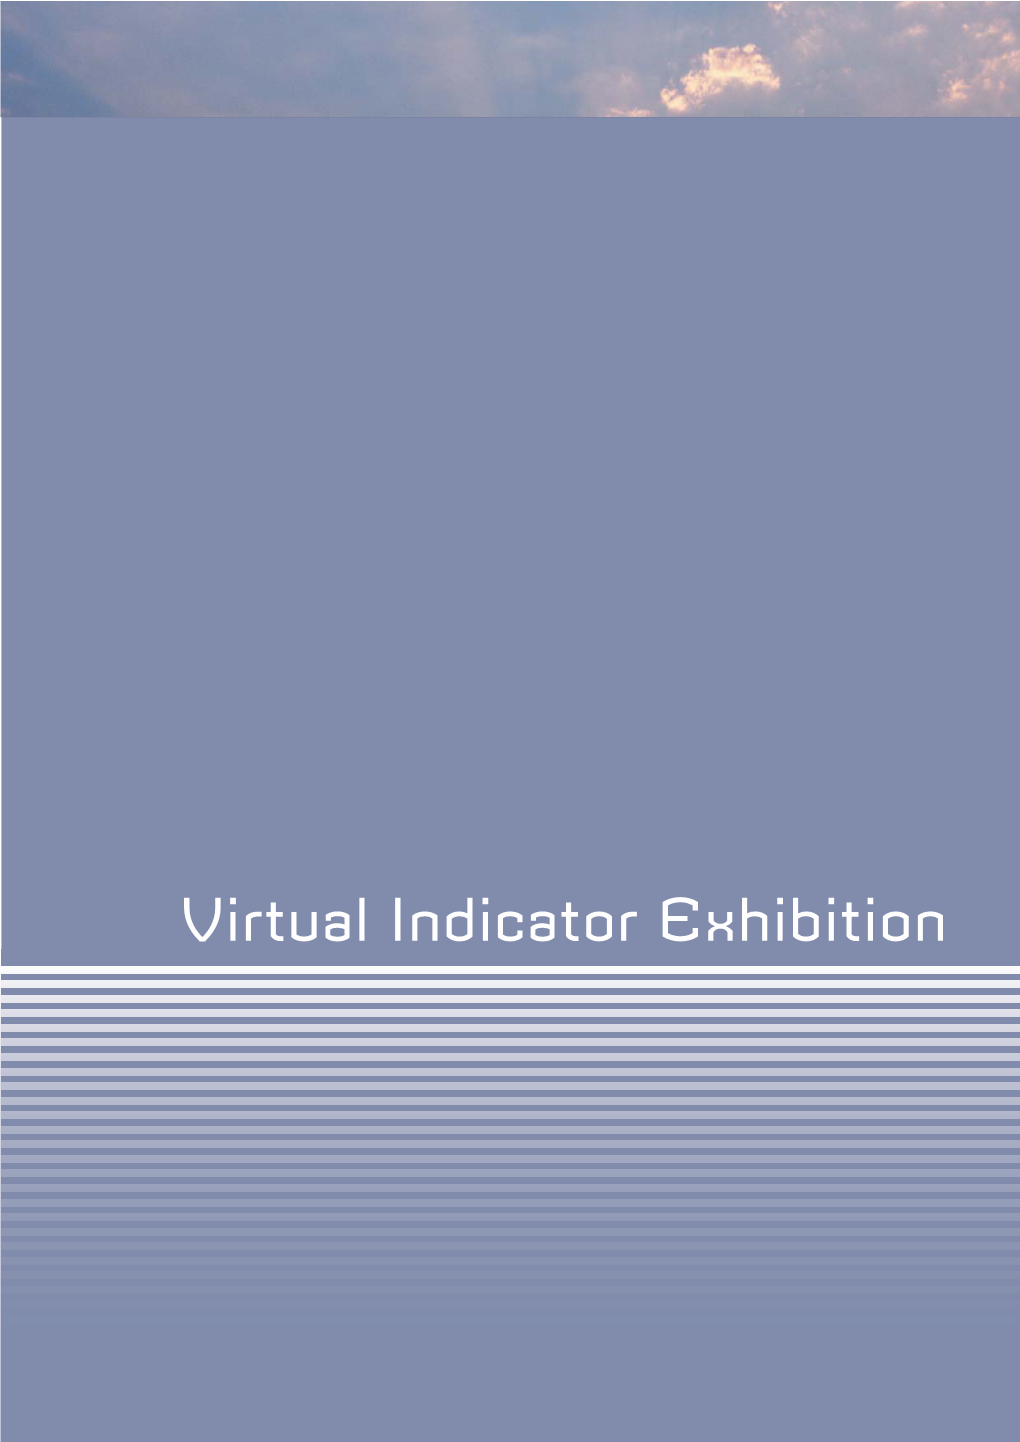 Virtual Indicator Exhibition Virtual Indicator Exhibition